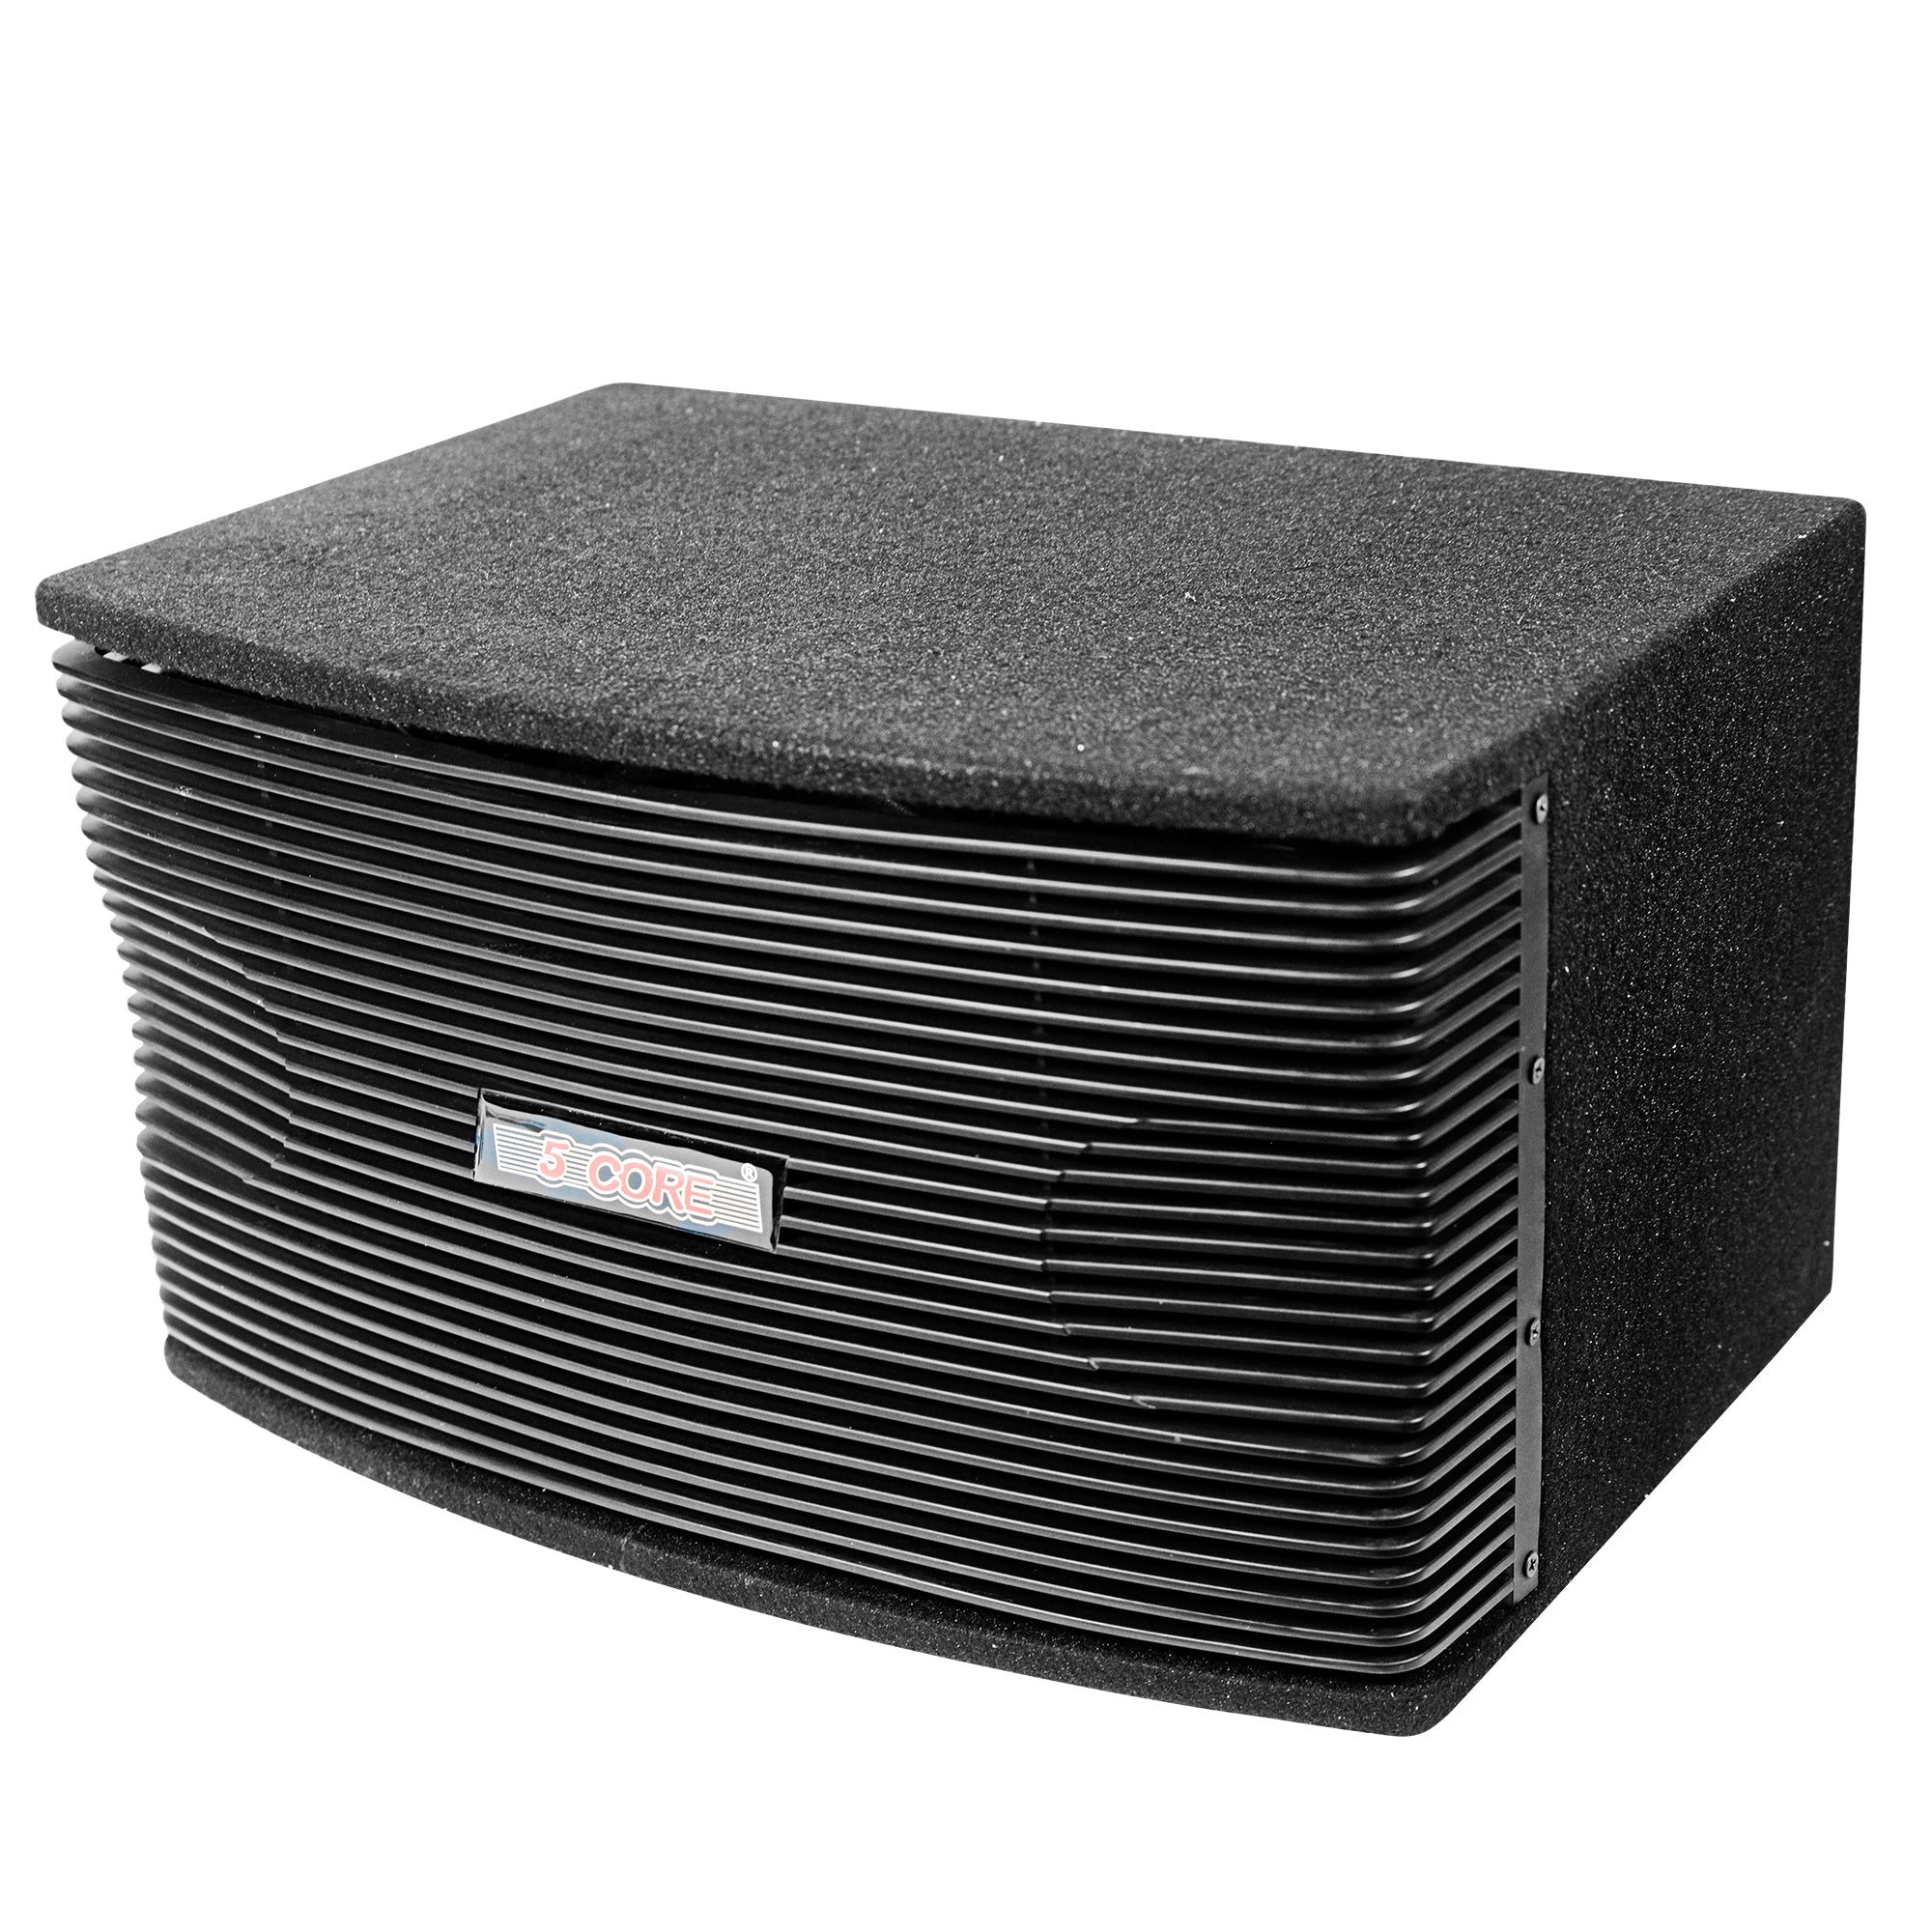 5 Core 8 Inch 800W PMPO Car Subwoofer Enclosure Box 100W Max RMS Audio Loud Speaker